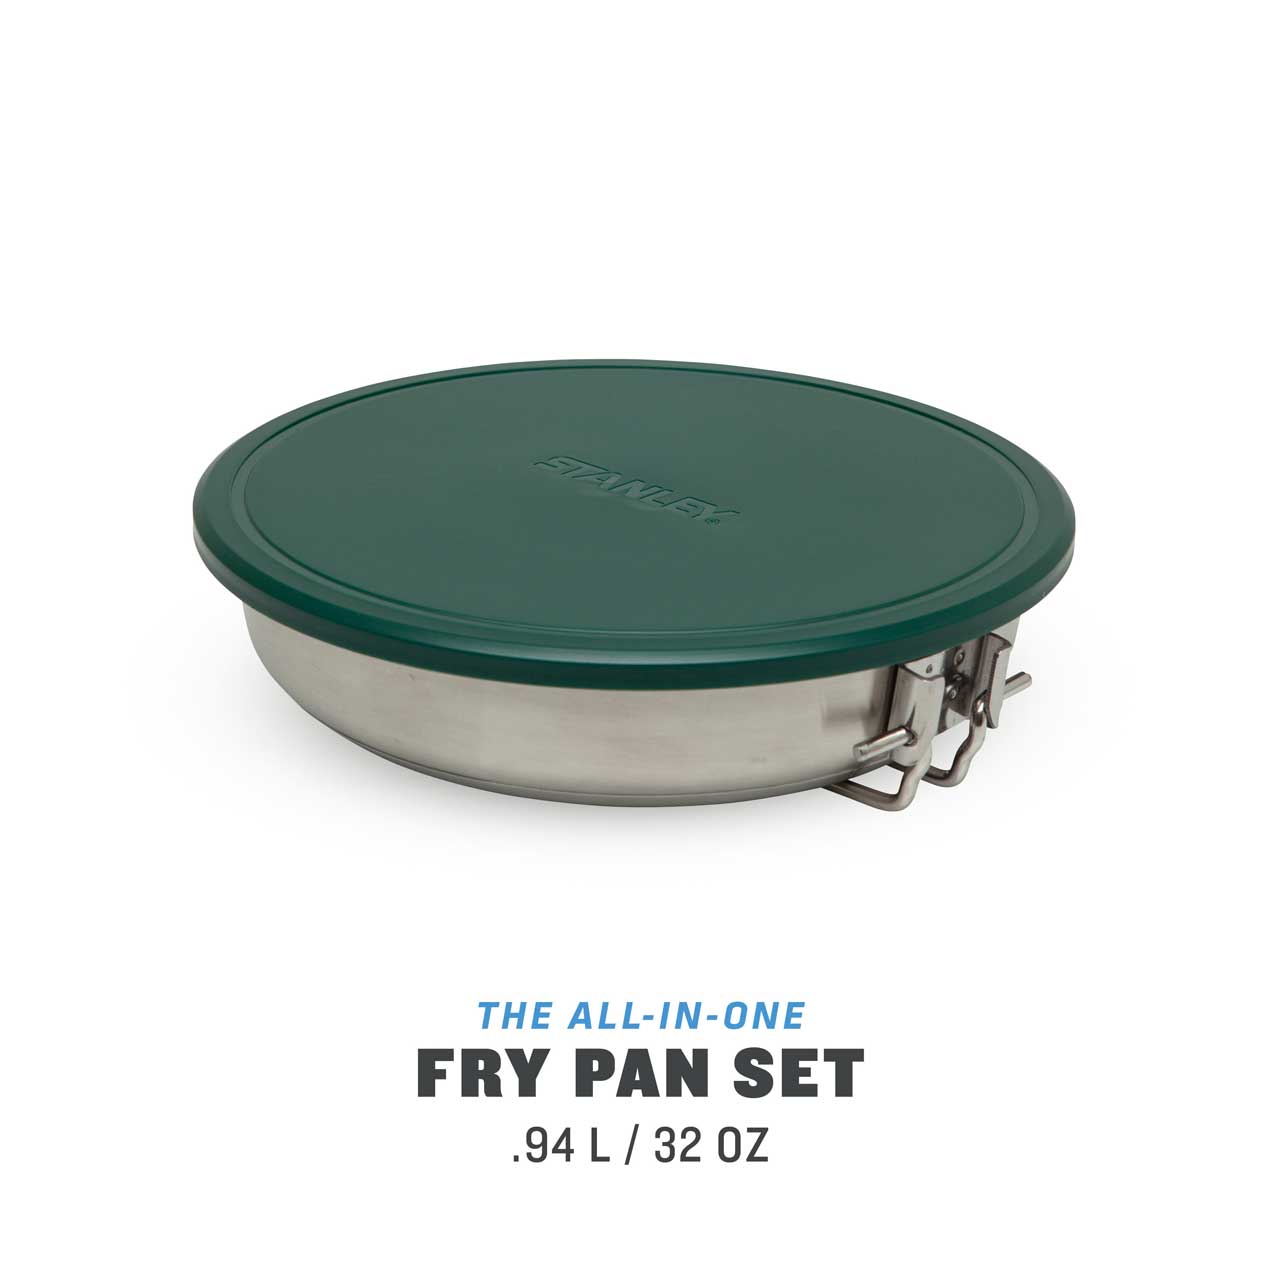 ADVENTURE FRY PAN SET